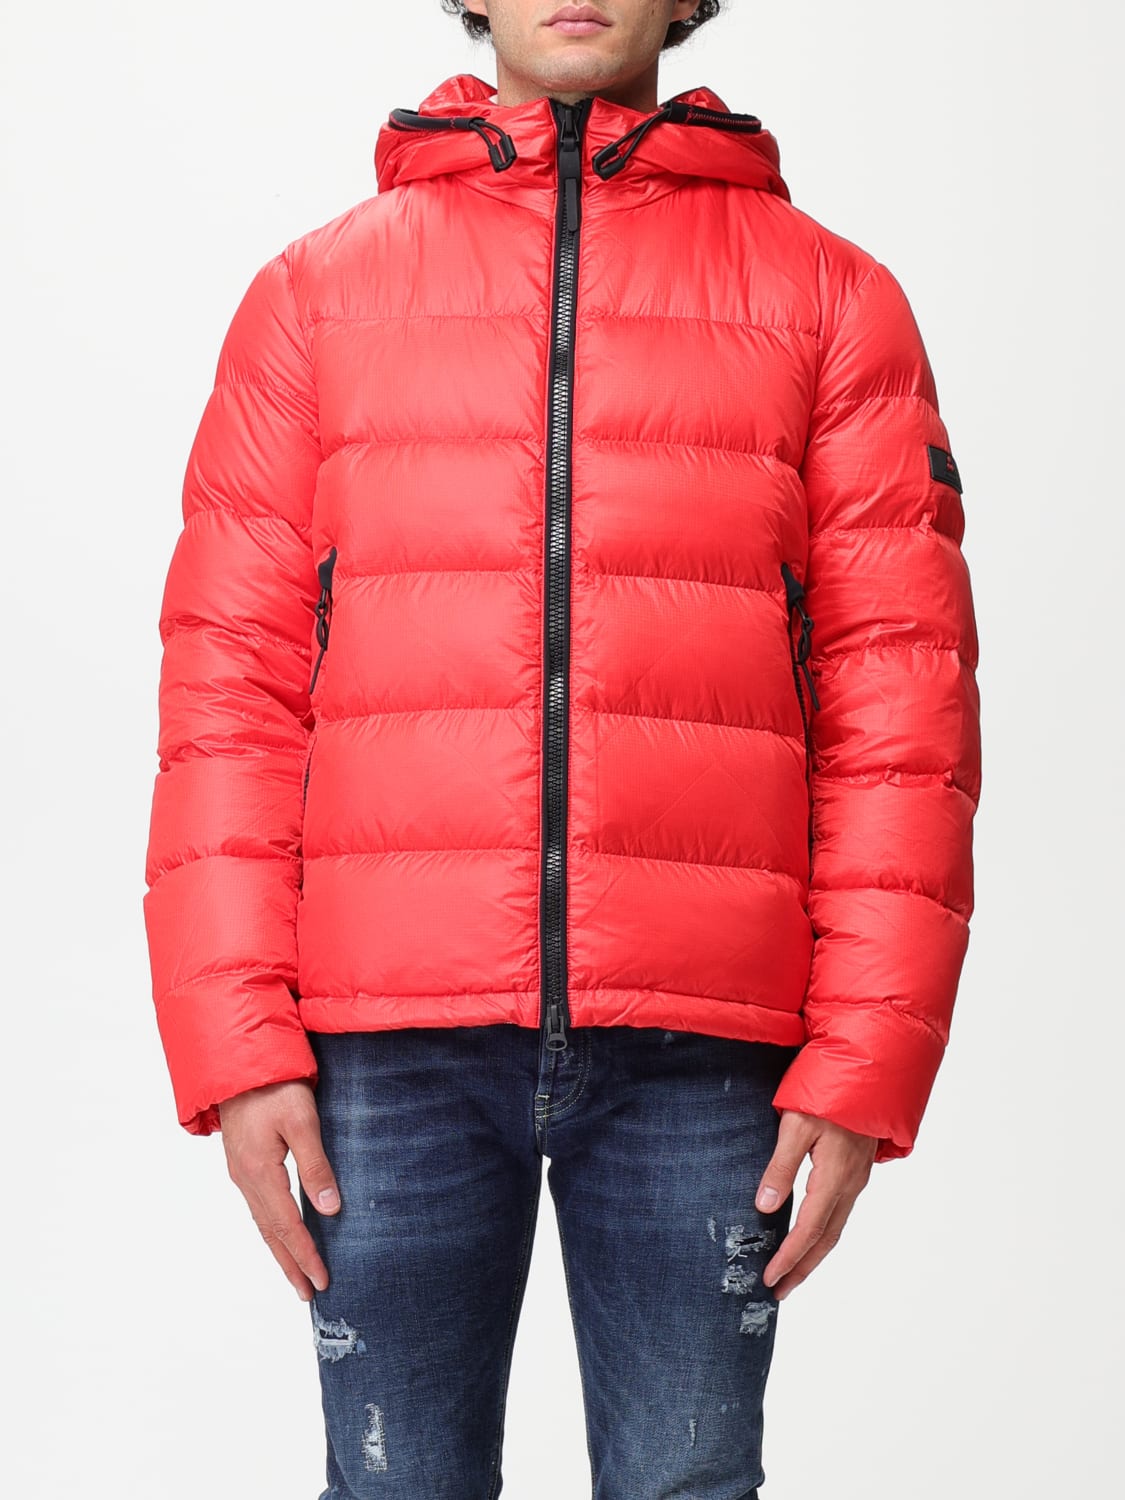 PEUTEREY: Jacket men - Red | PEUTEREY jacket PEU483001181864 online at ...